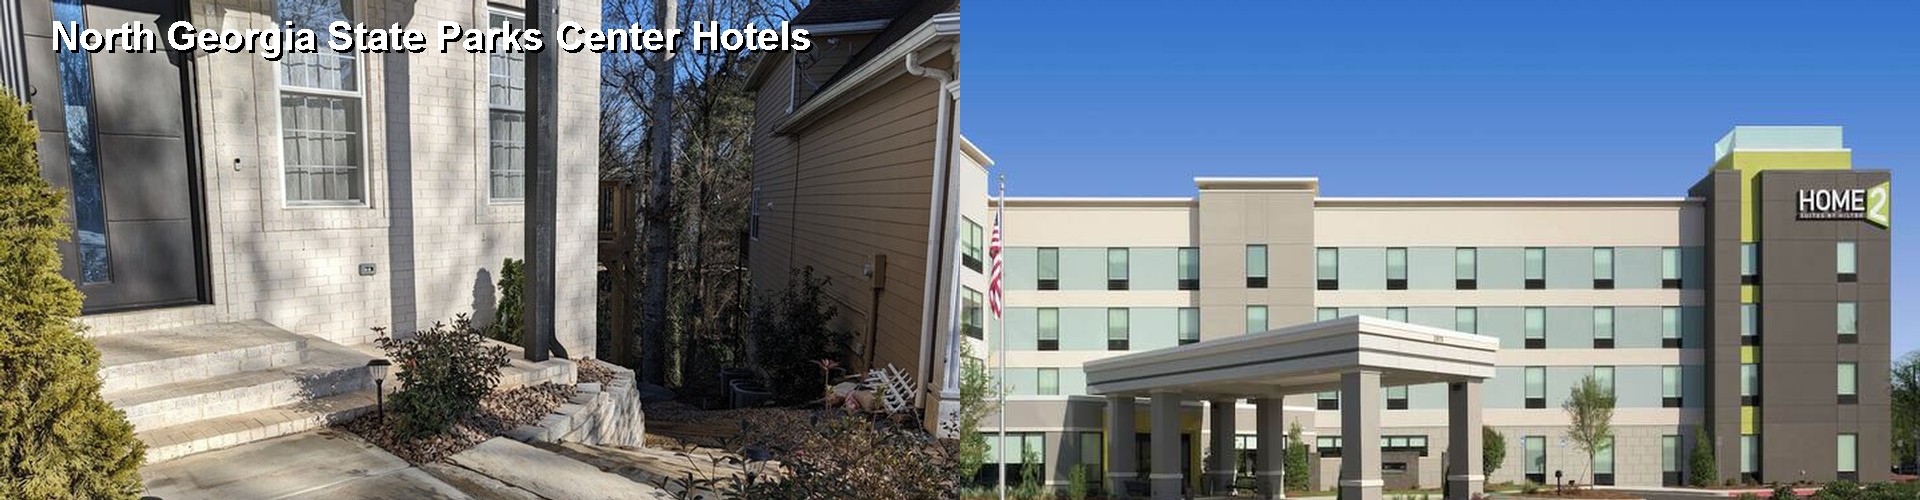 4 Best Hotels near North Georgia State Parks Center